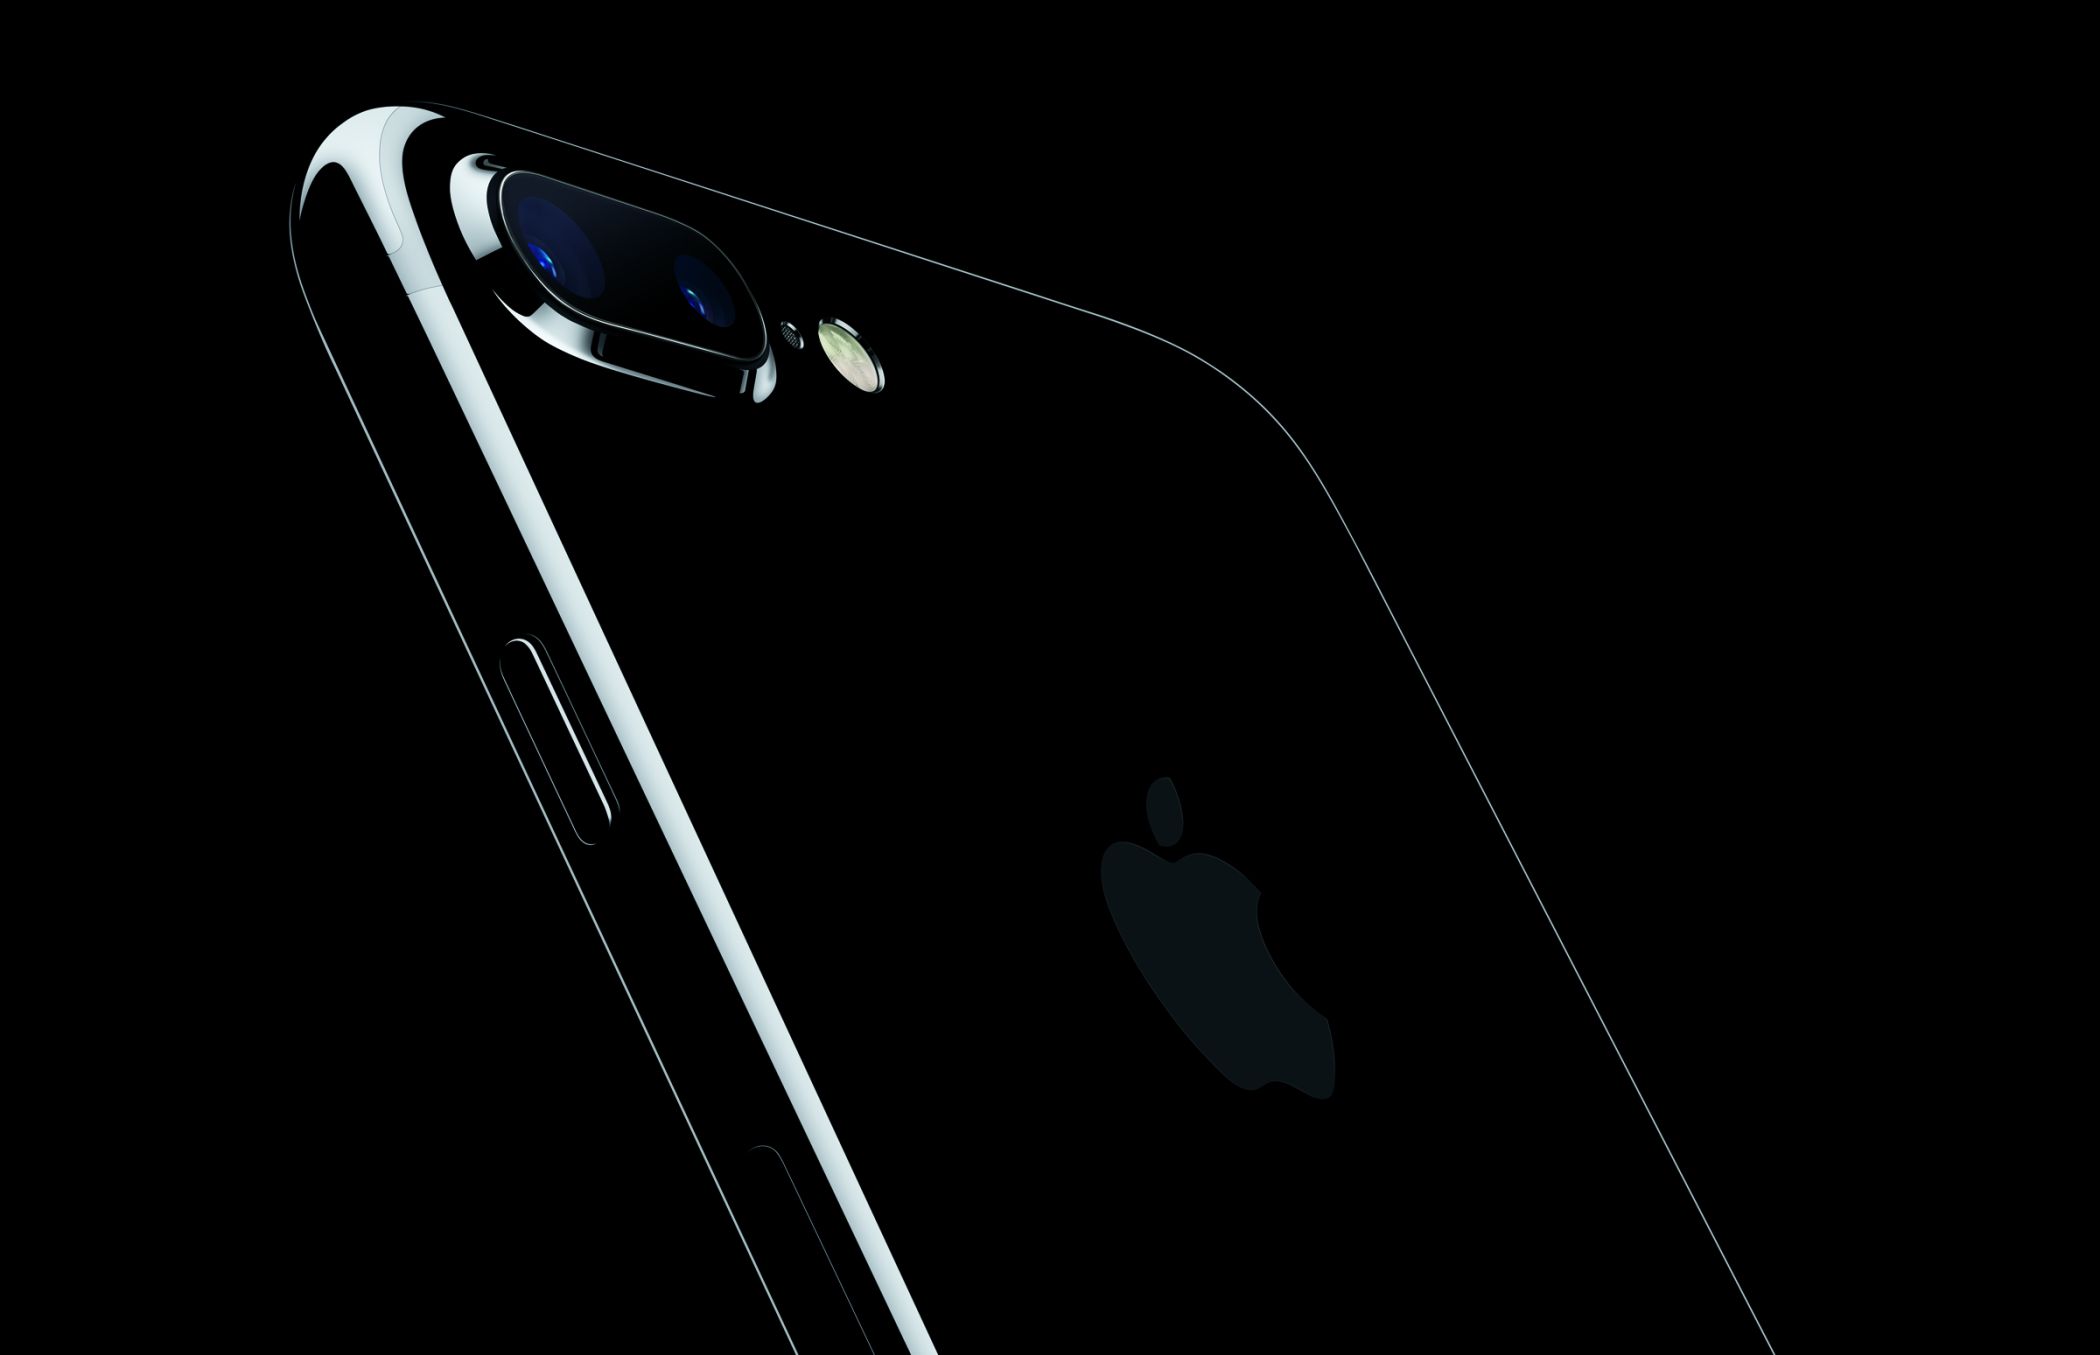 iPhone7Plus JetBlack, Bild: Apple